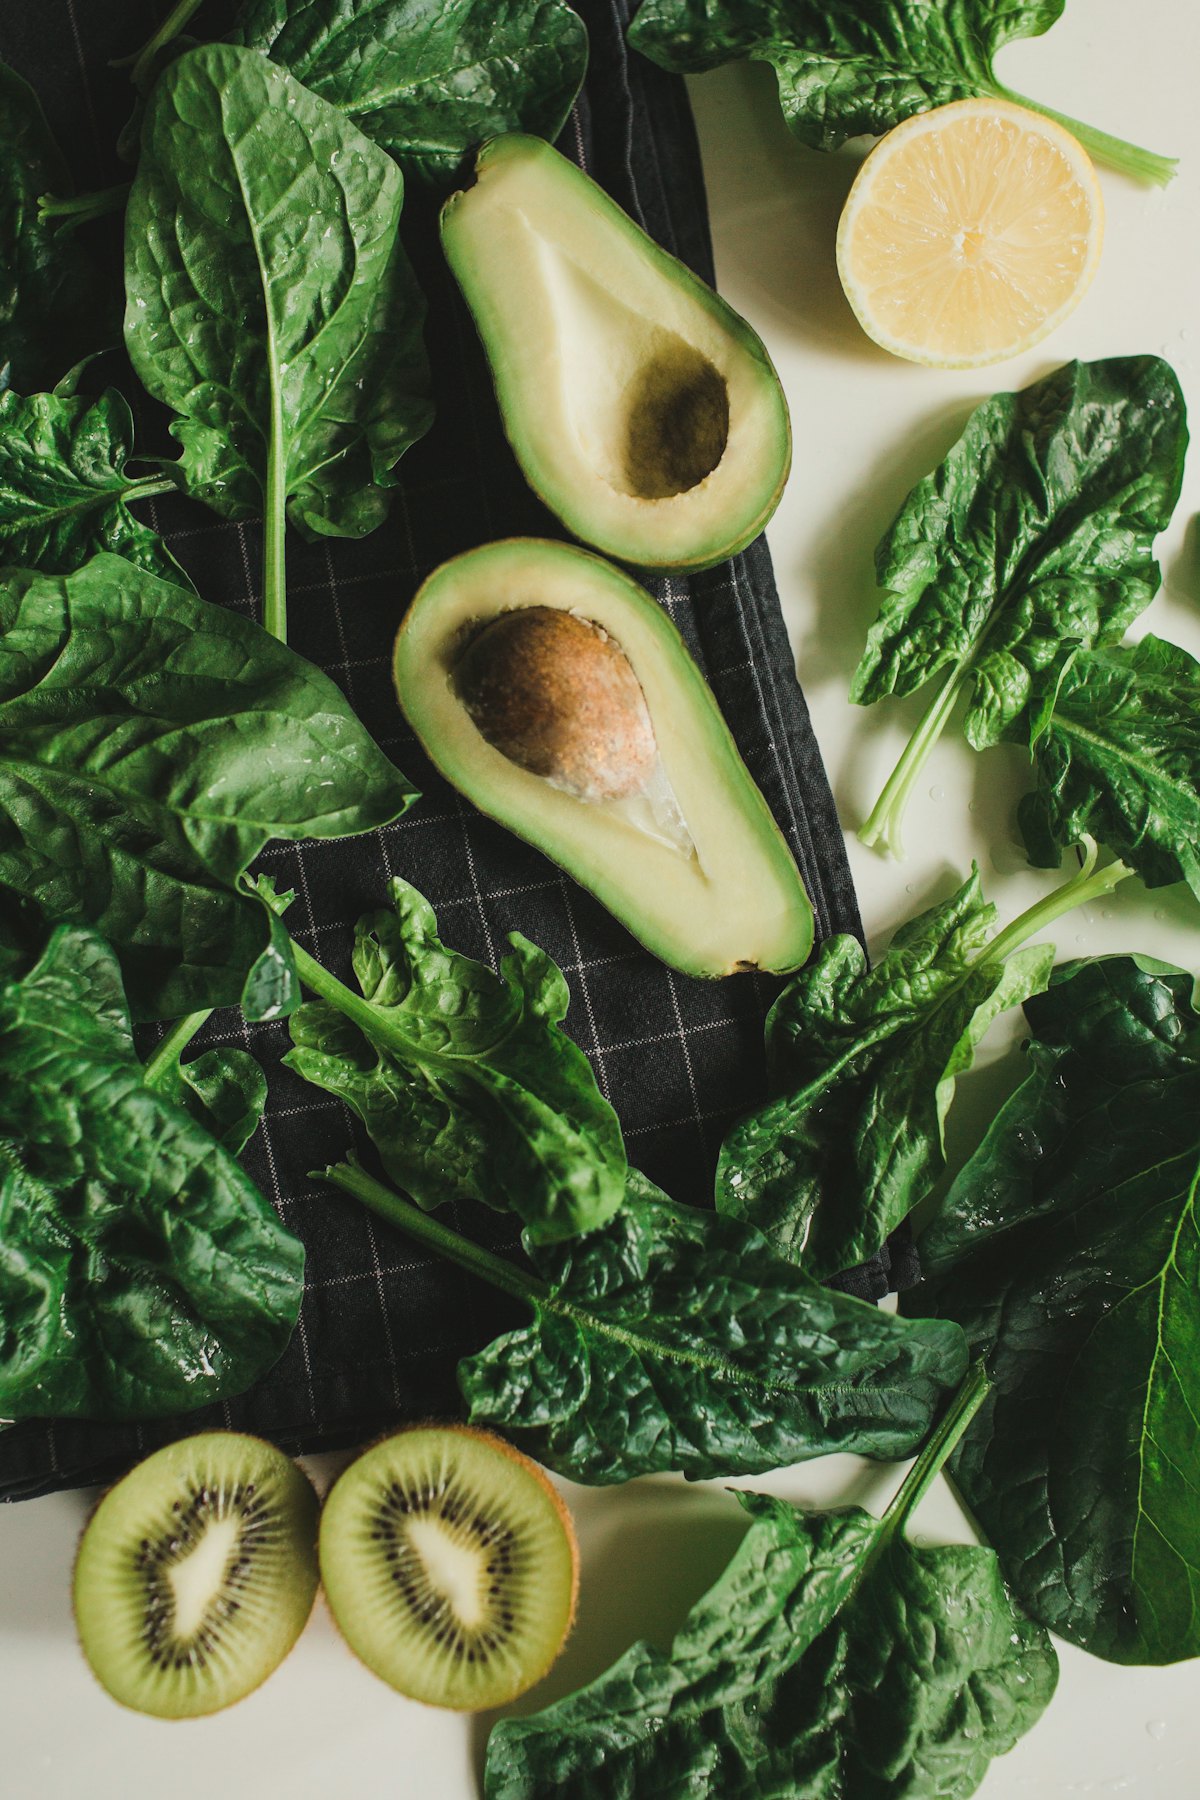 Avocado Helps Gut Health, Study Says